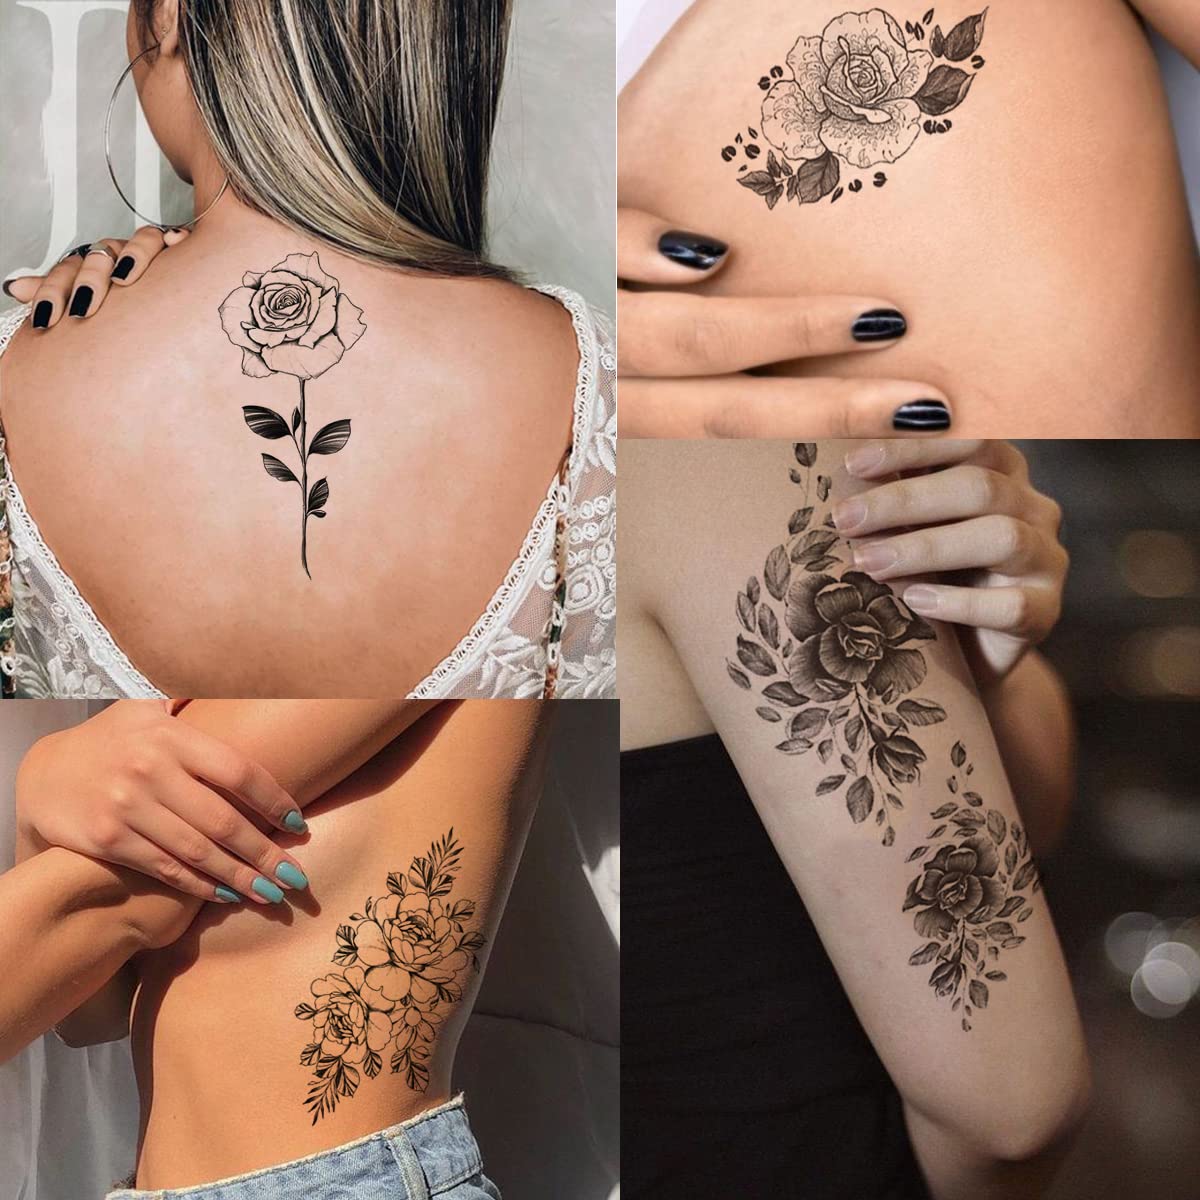 Tazimi 10 Sheets 3D Black Flower Rose Temporary Tattoos For Women, Waterproof Fake Body Art Arm Sketch Tattoo Stickers For Women Girls